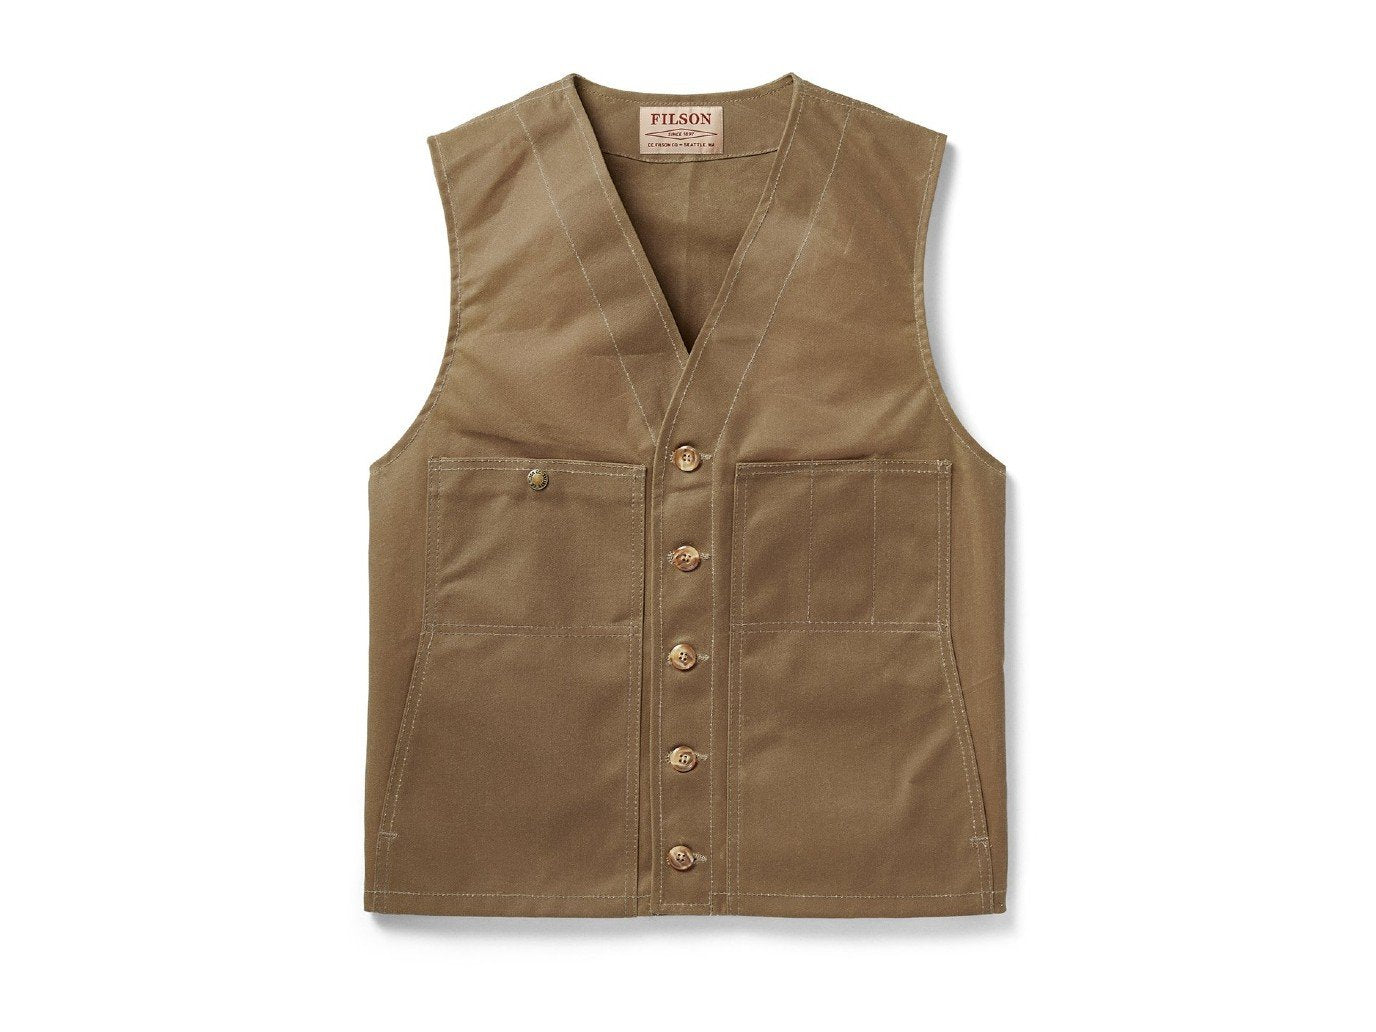 Filson Oil Tin Cloth Vest in dark tan